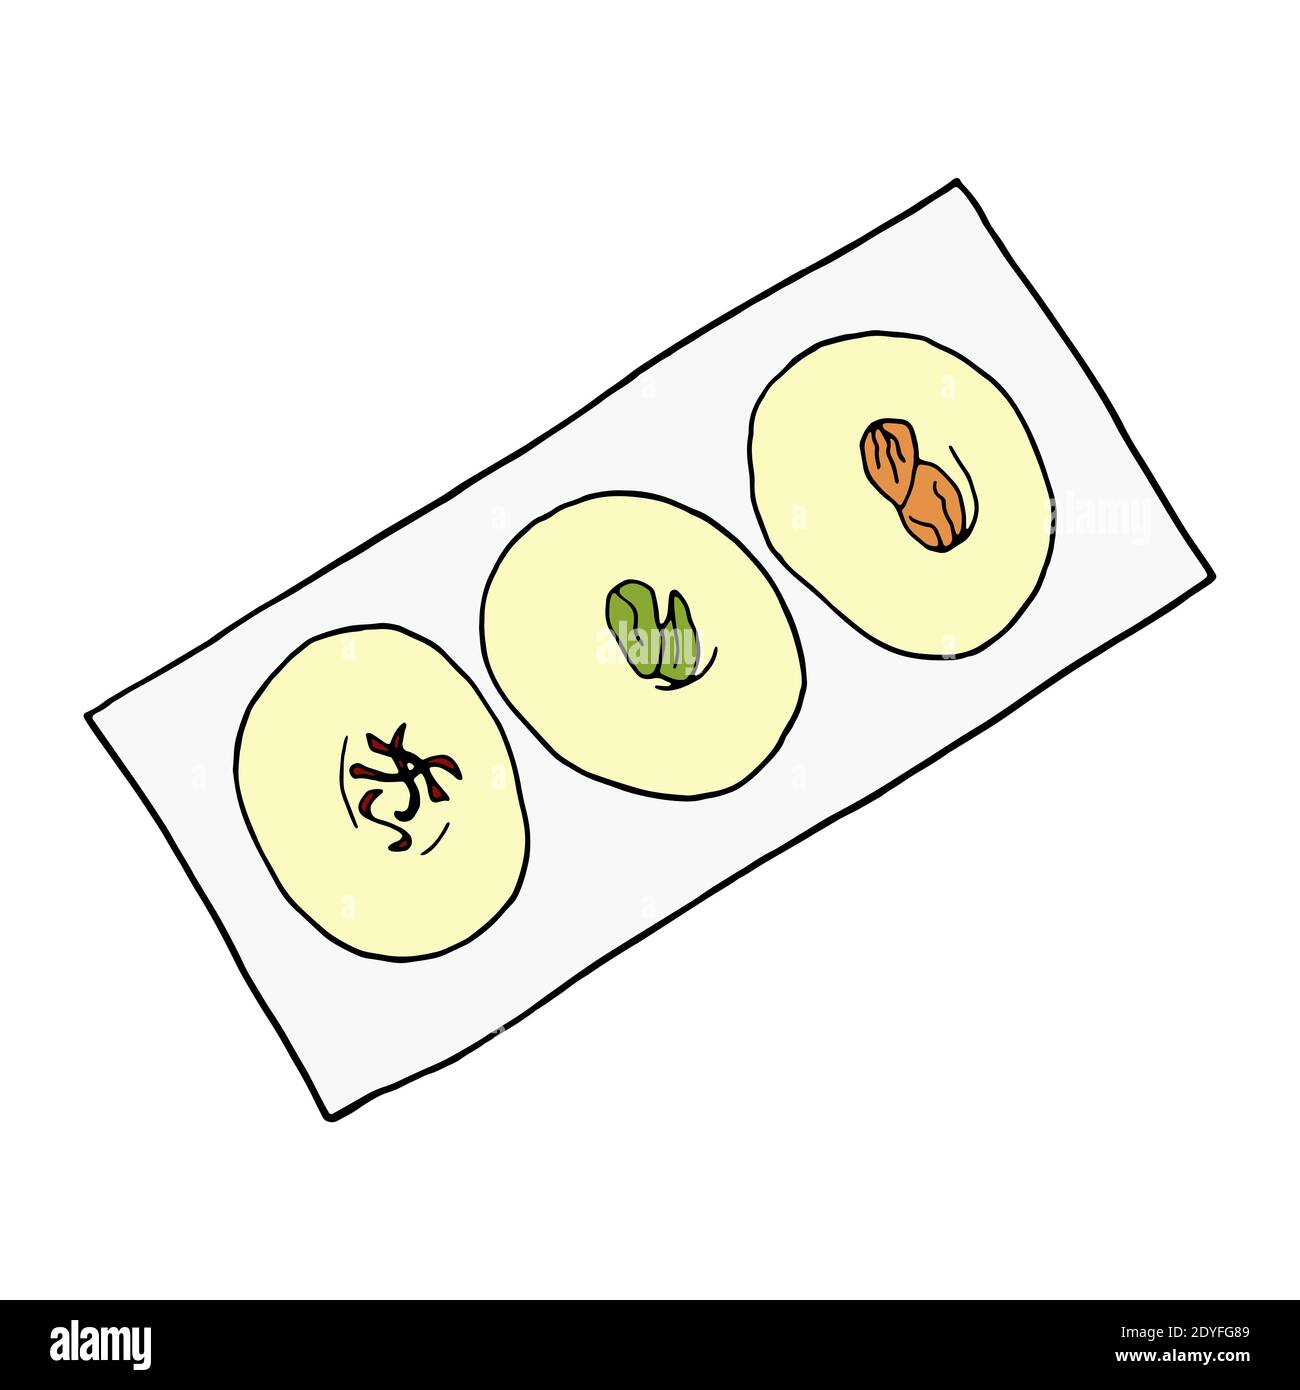 Vector hand drawn doodle sandesh. Indian dessert. Design sketch element for menu cafe, restaurant, label and packaging. Colorful illustration on a whi Stock Vector